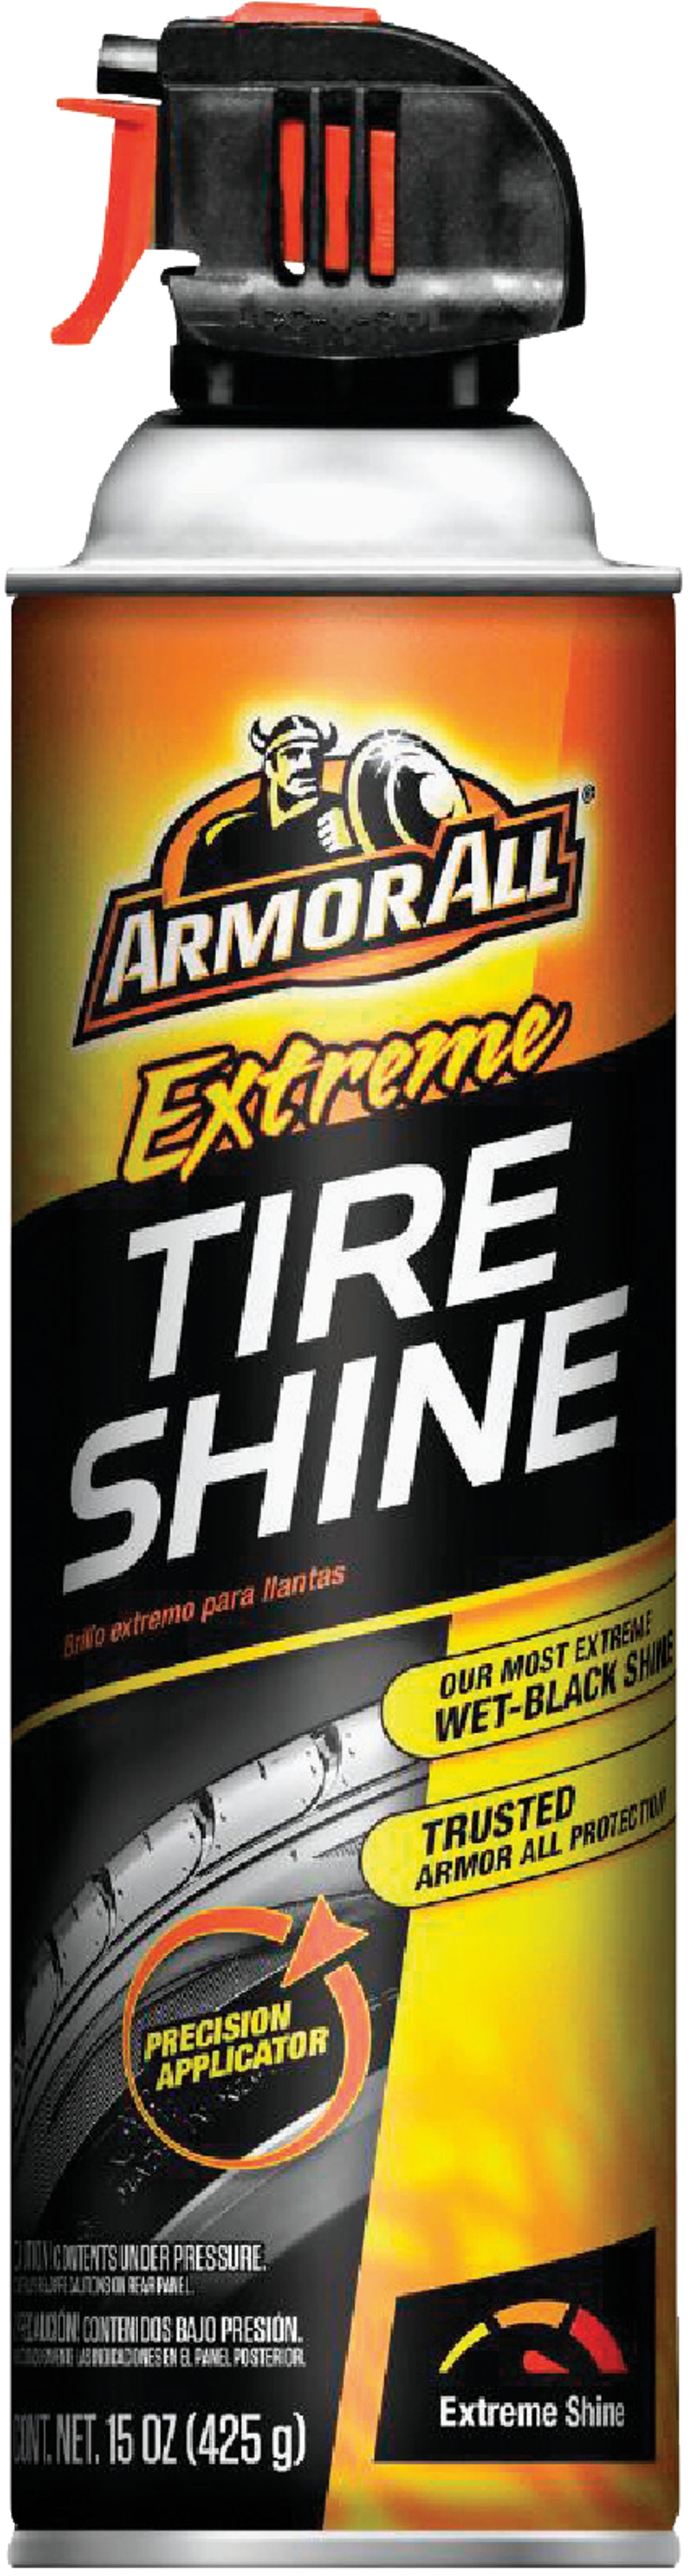 Buy Armor All Extreme Tire Shine 22 Oz.